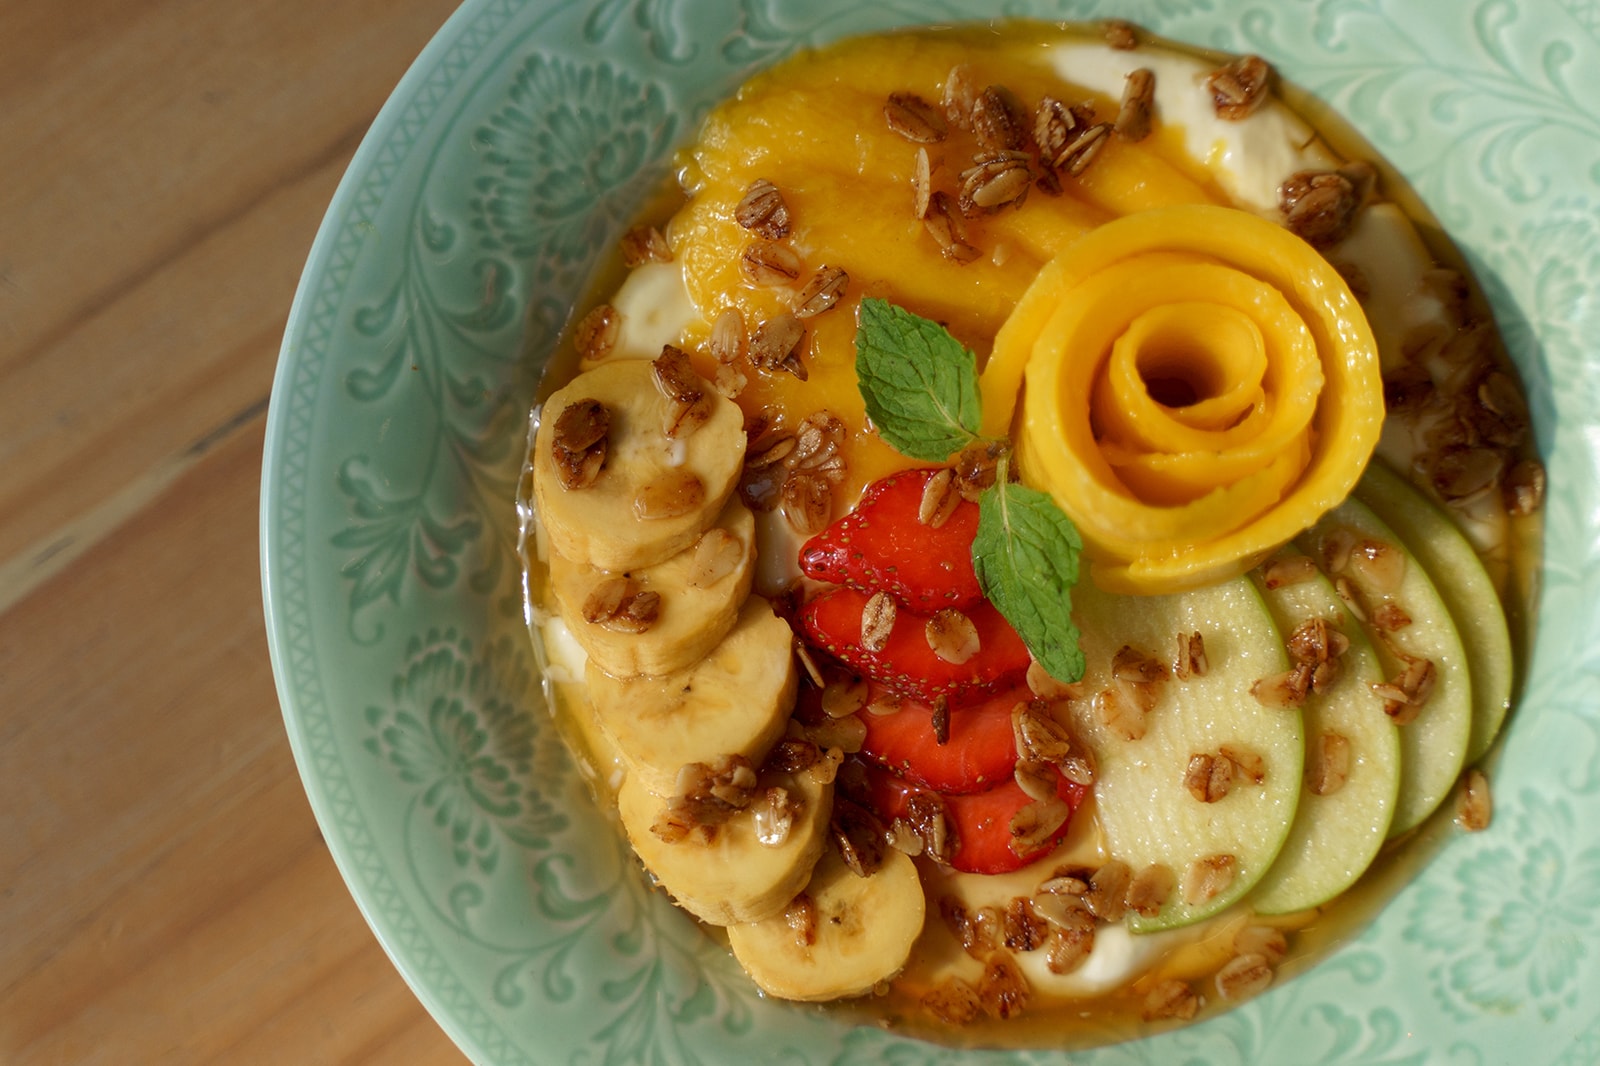 sunnies cafe brunch review manila philippines bgc high street french toast pancakes yogurt 